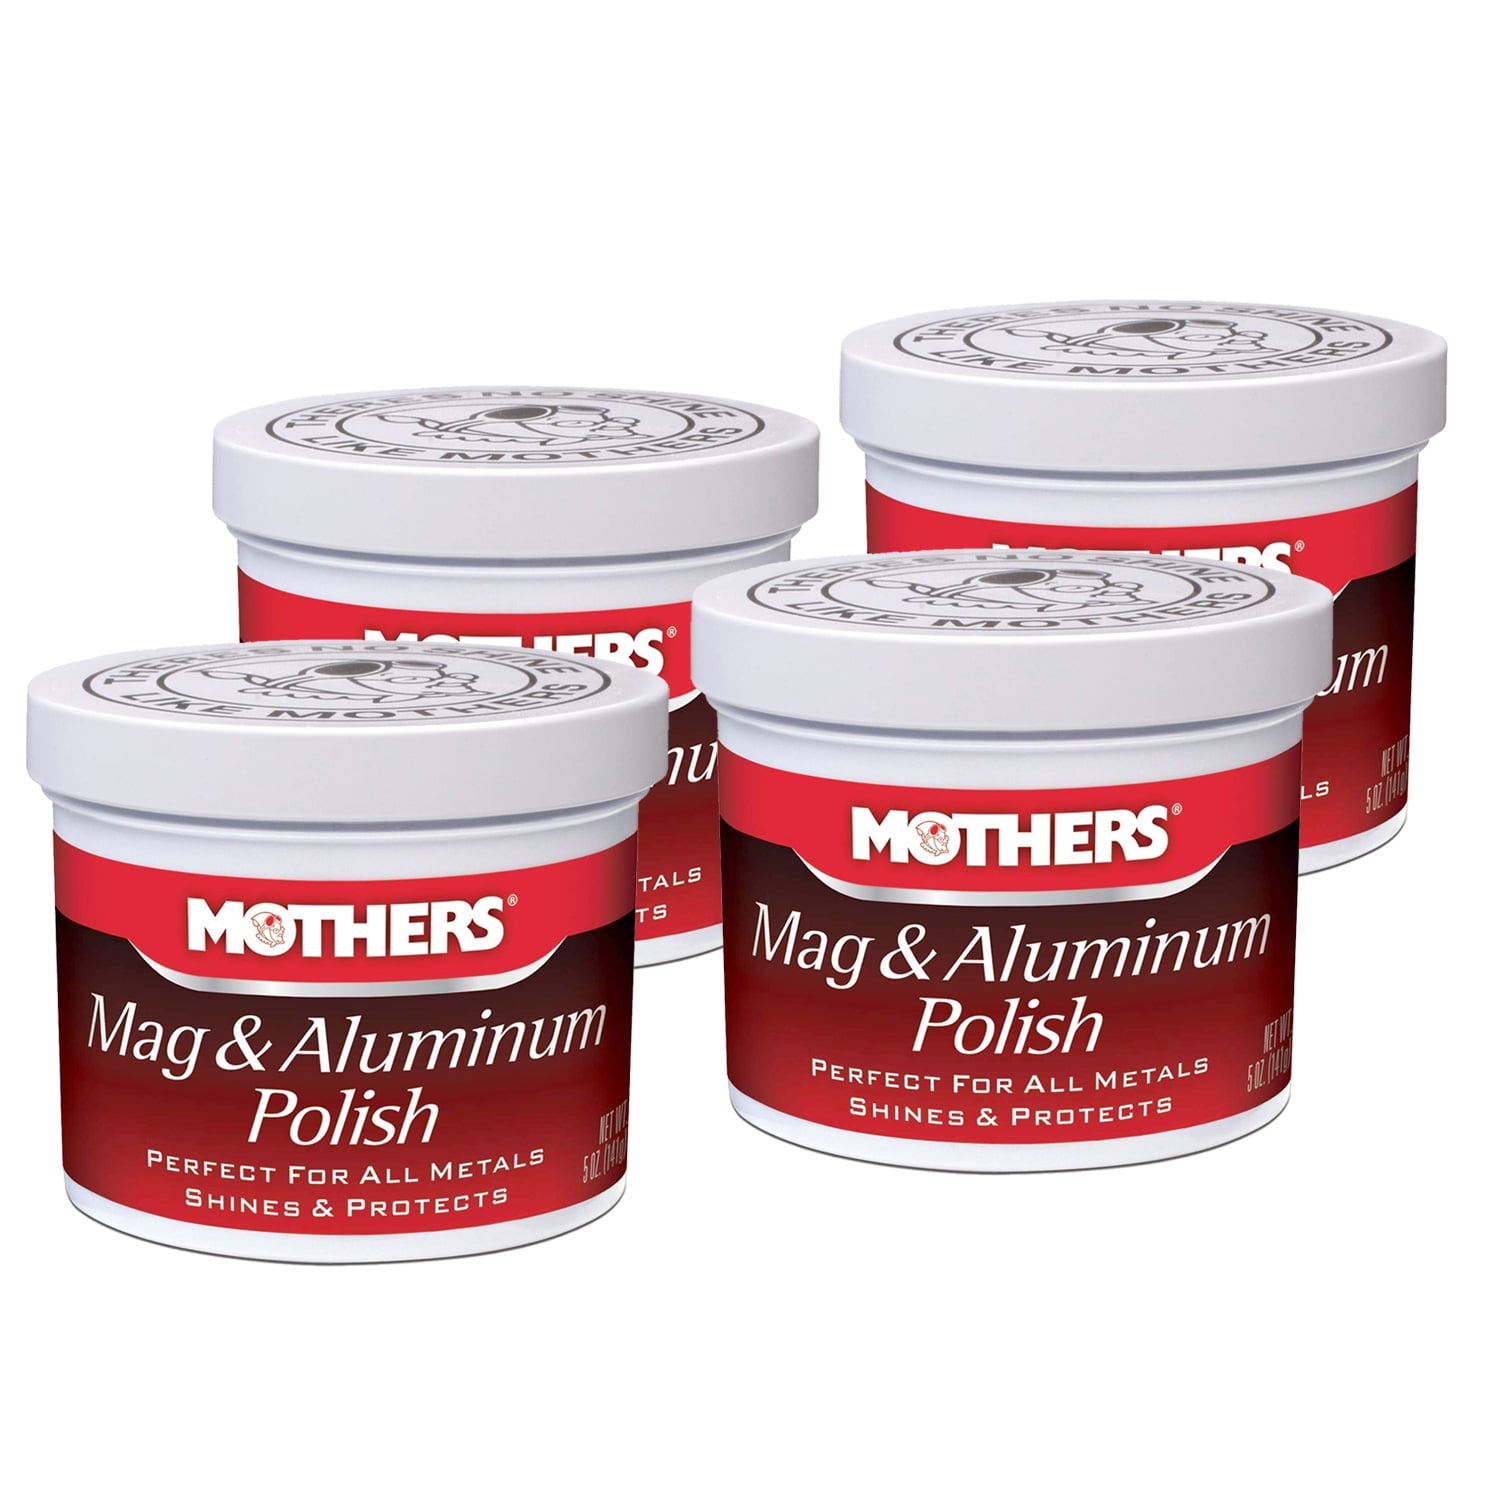 MOTHERS Mag & Aluminum Polish P/N - 5100